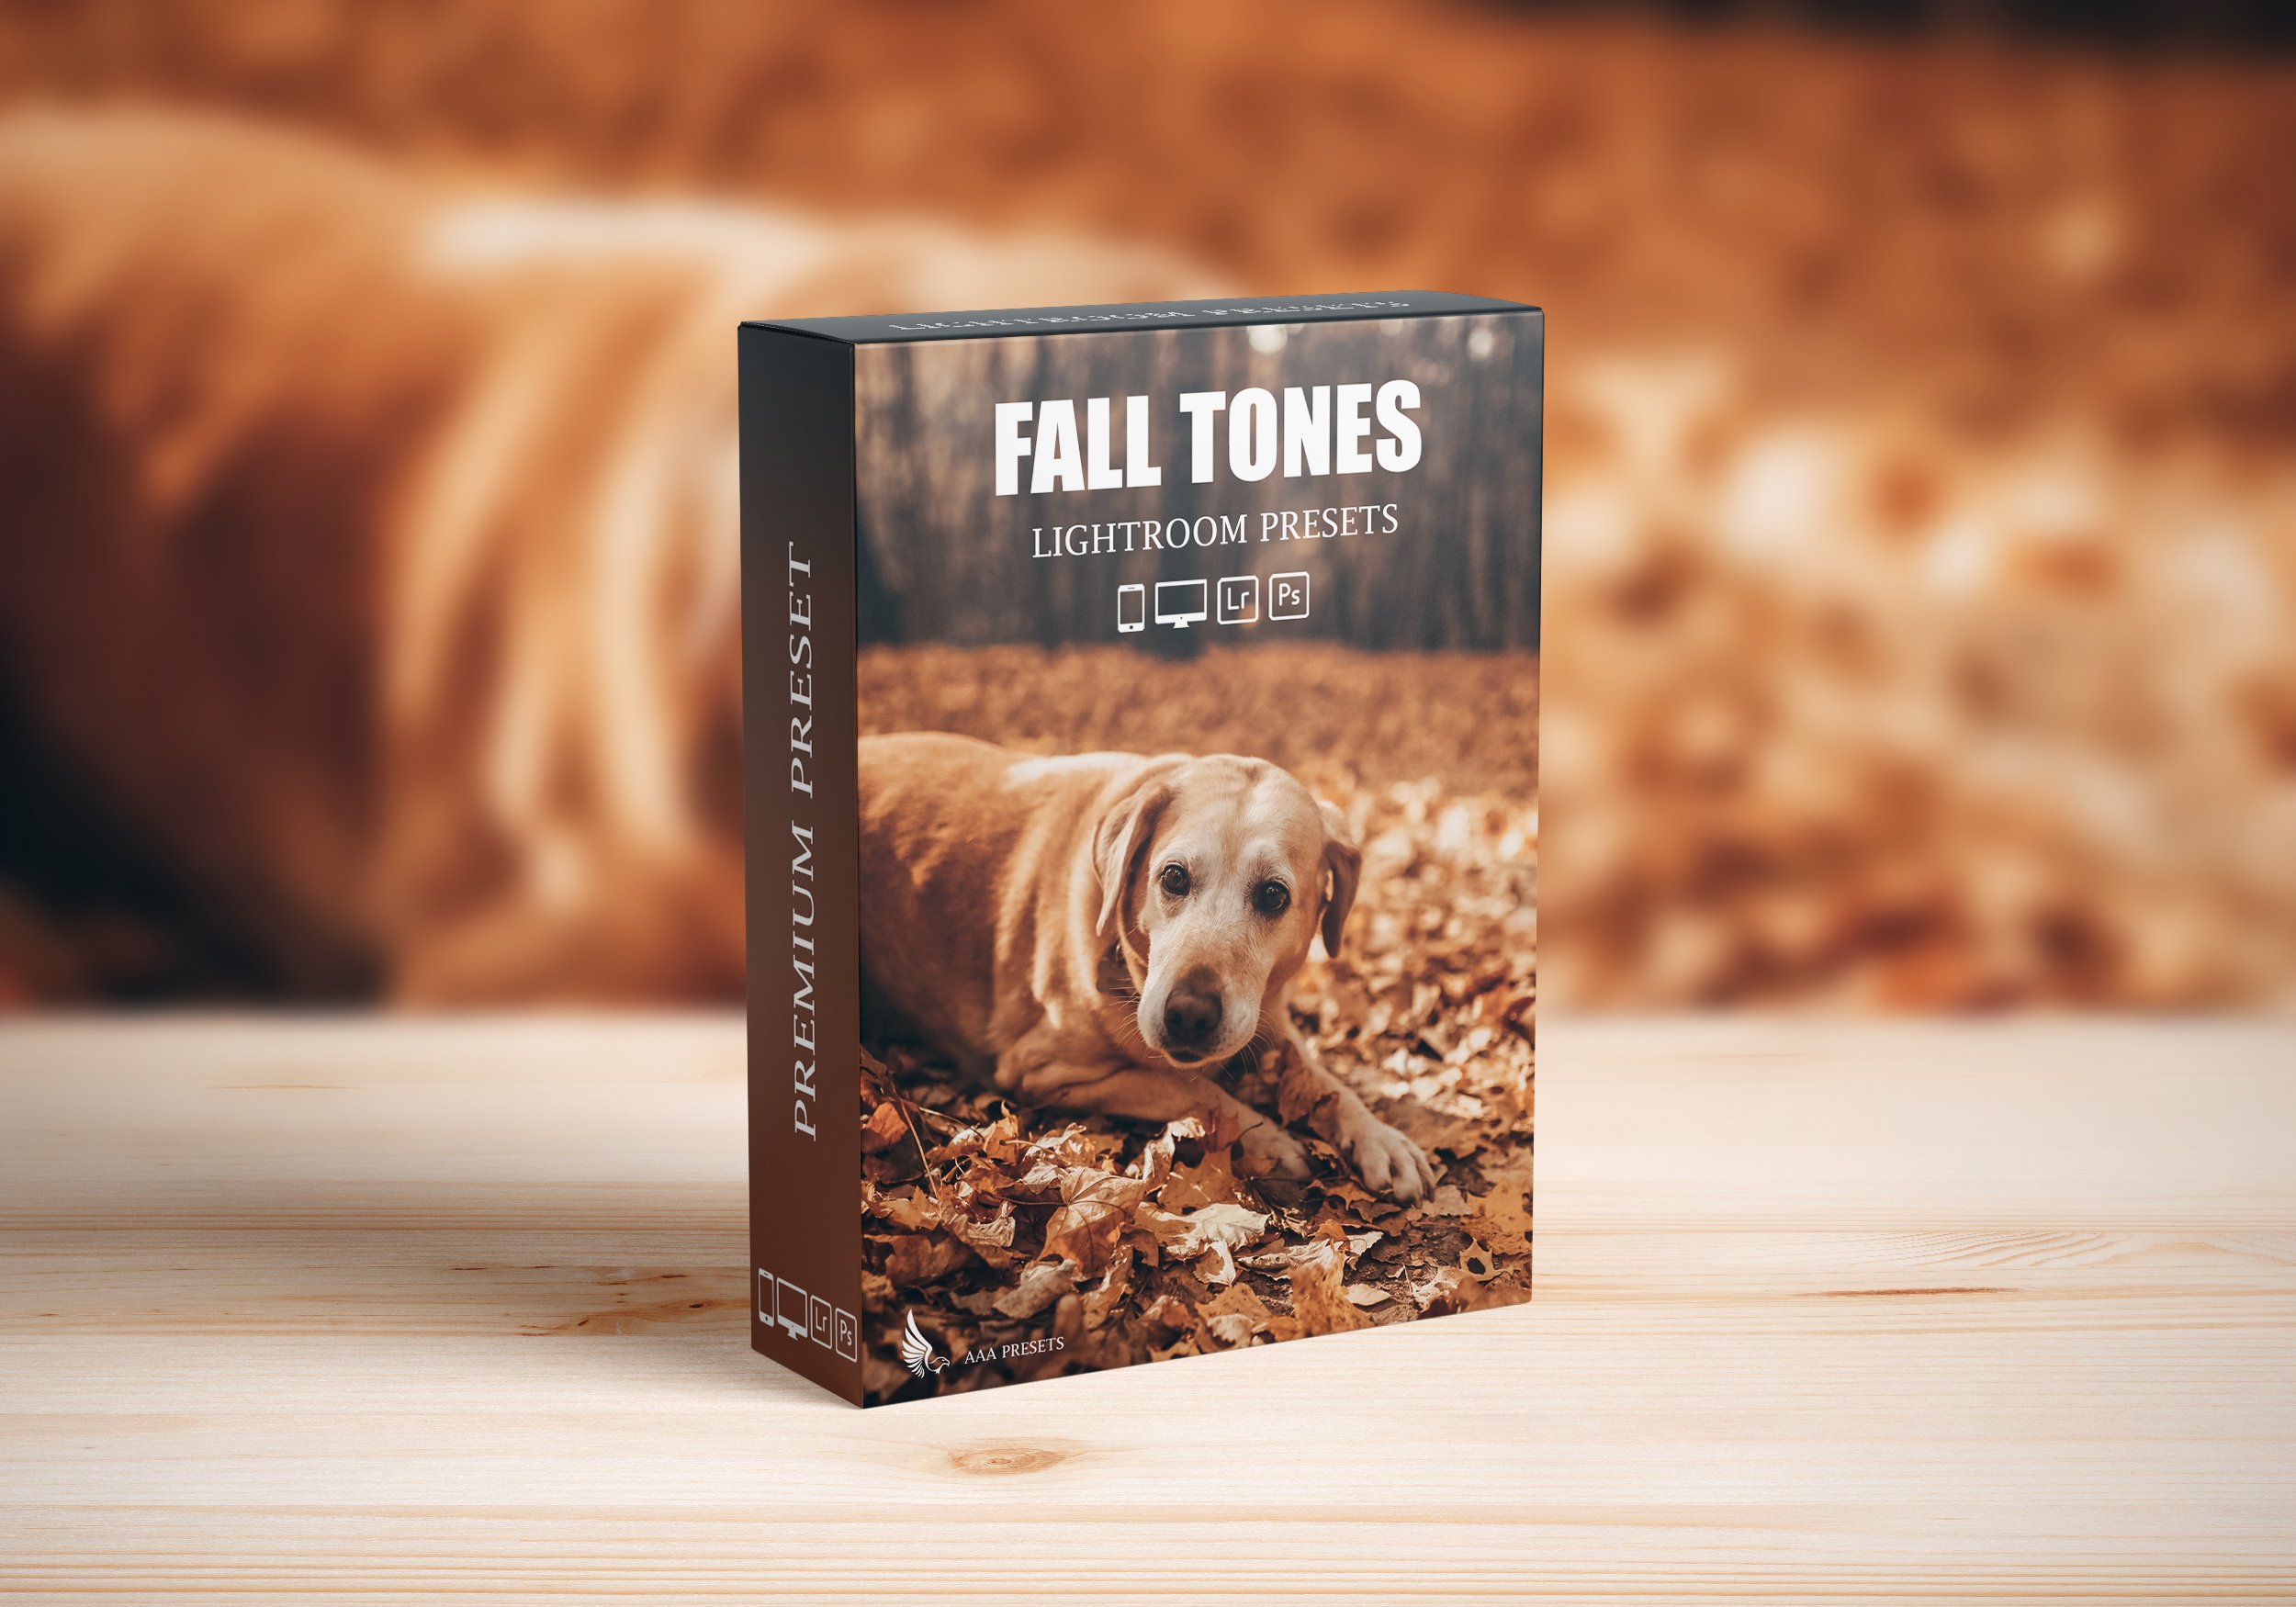 Autumn Fall Tones Lightroom Presetscover image.